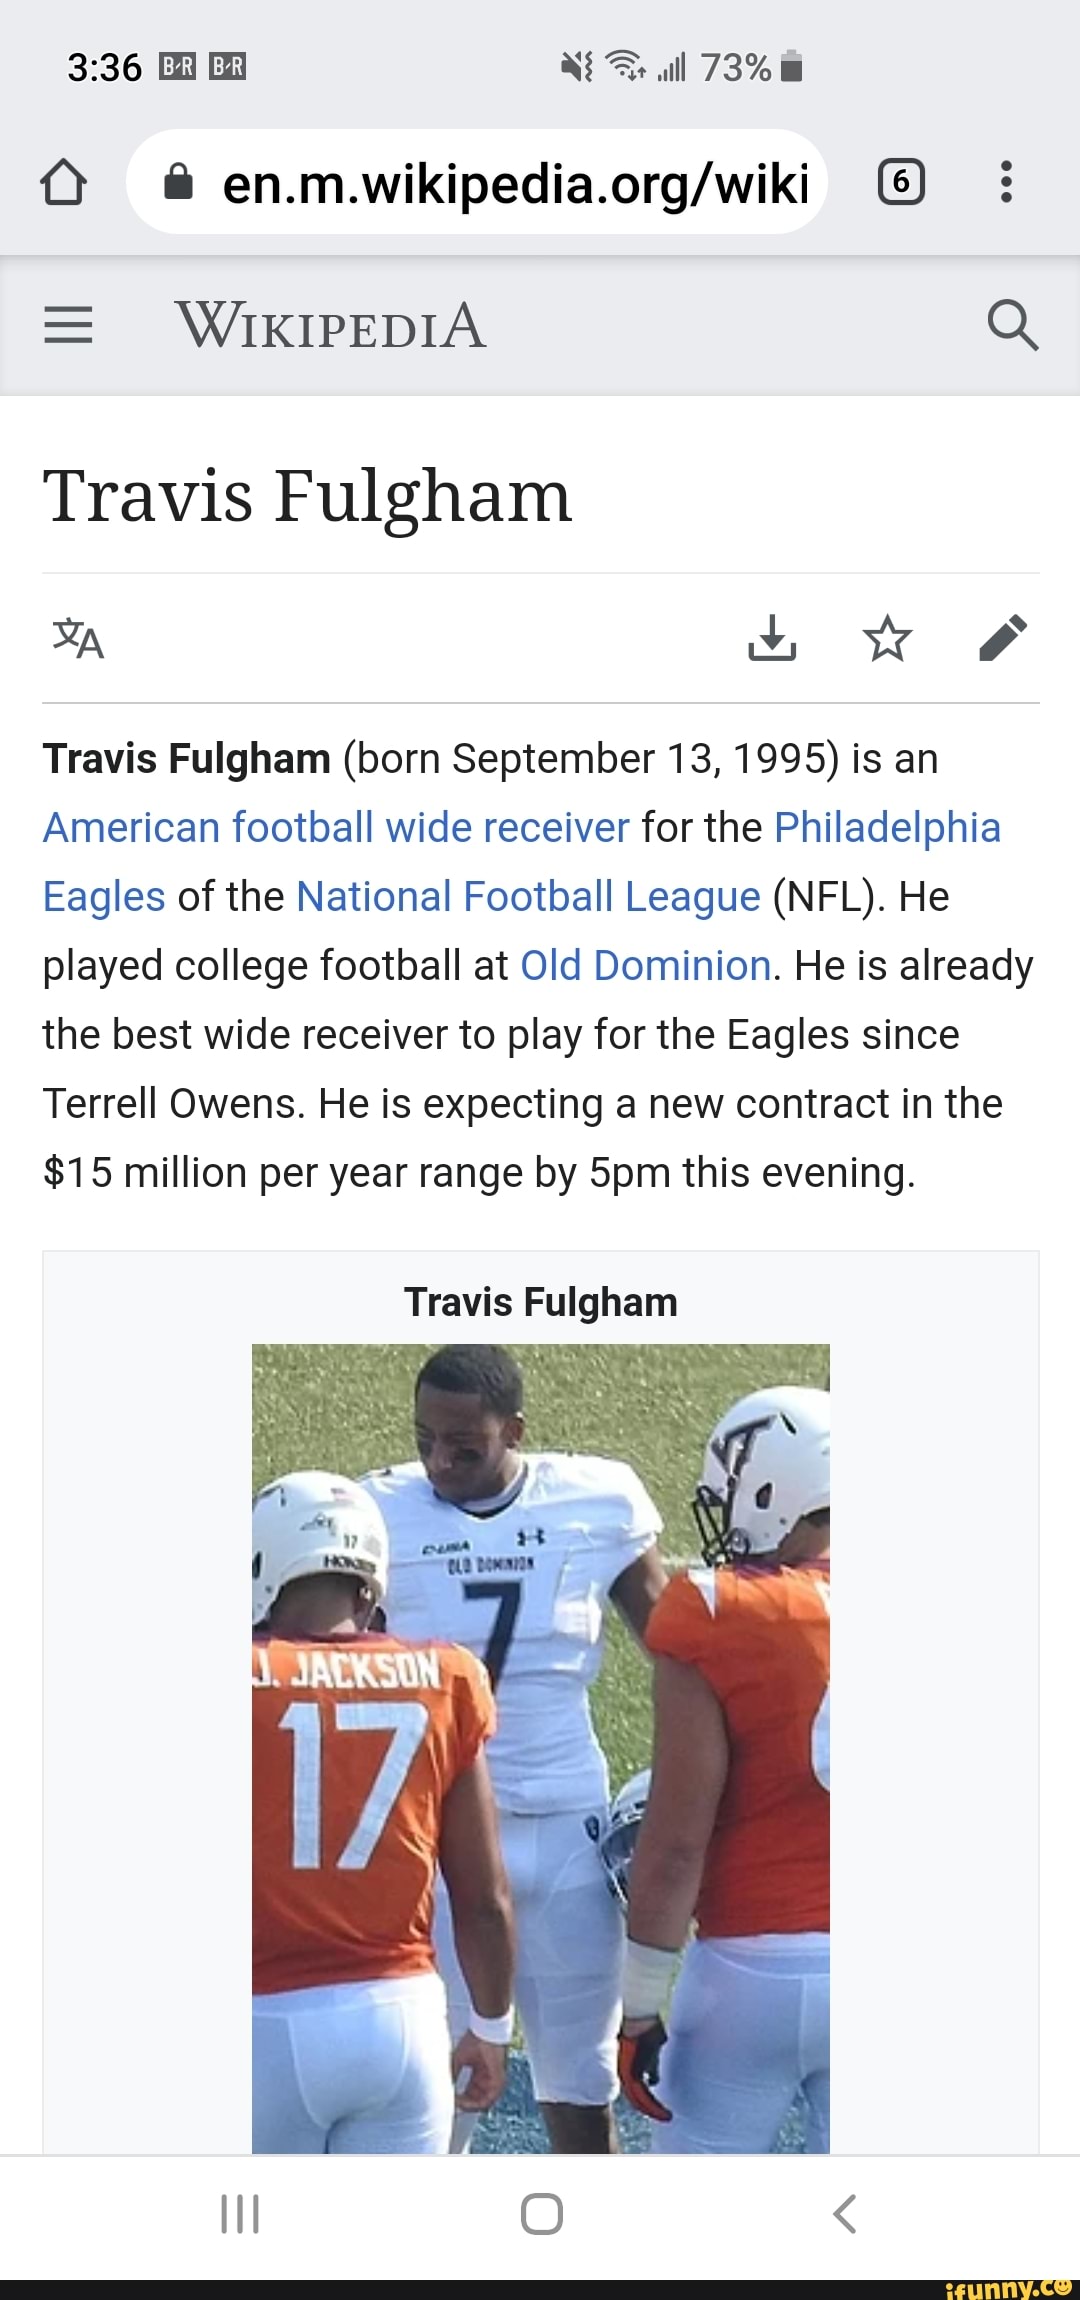 Philadelphia Eagles - Wikipedia